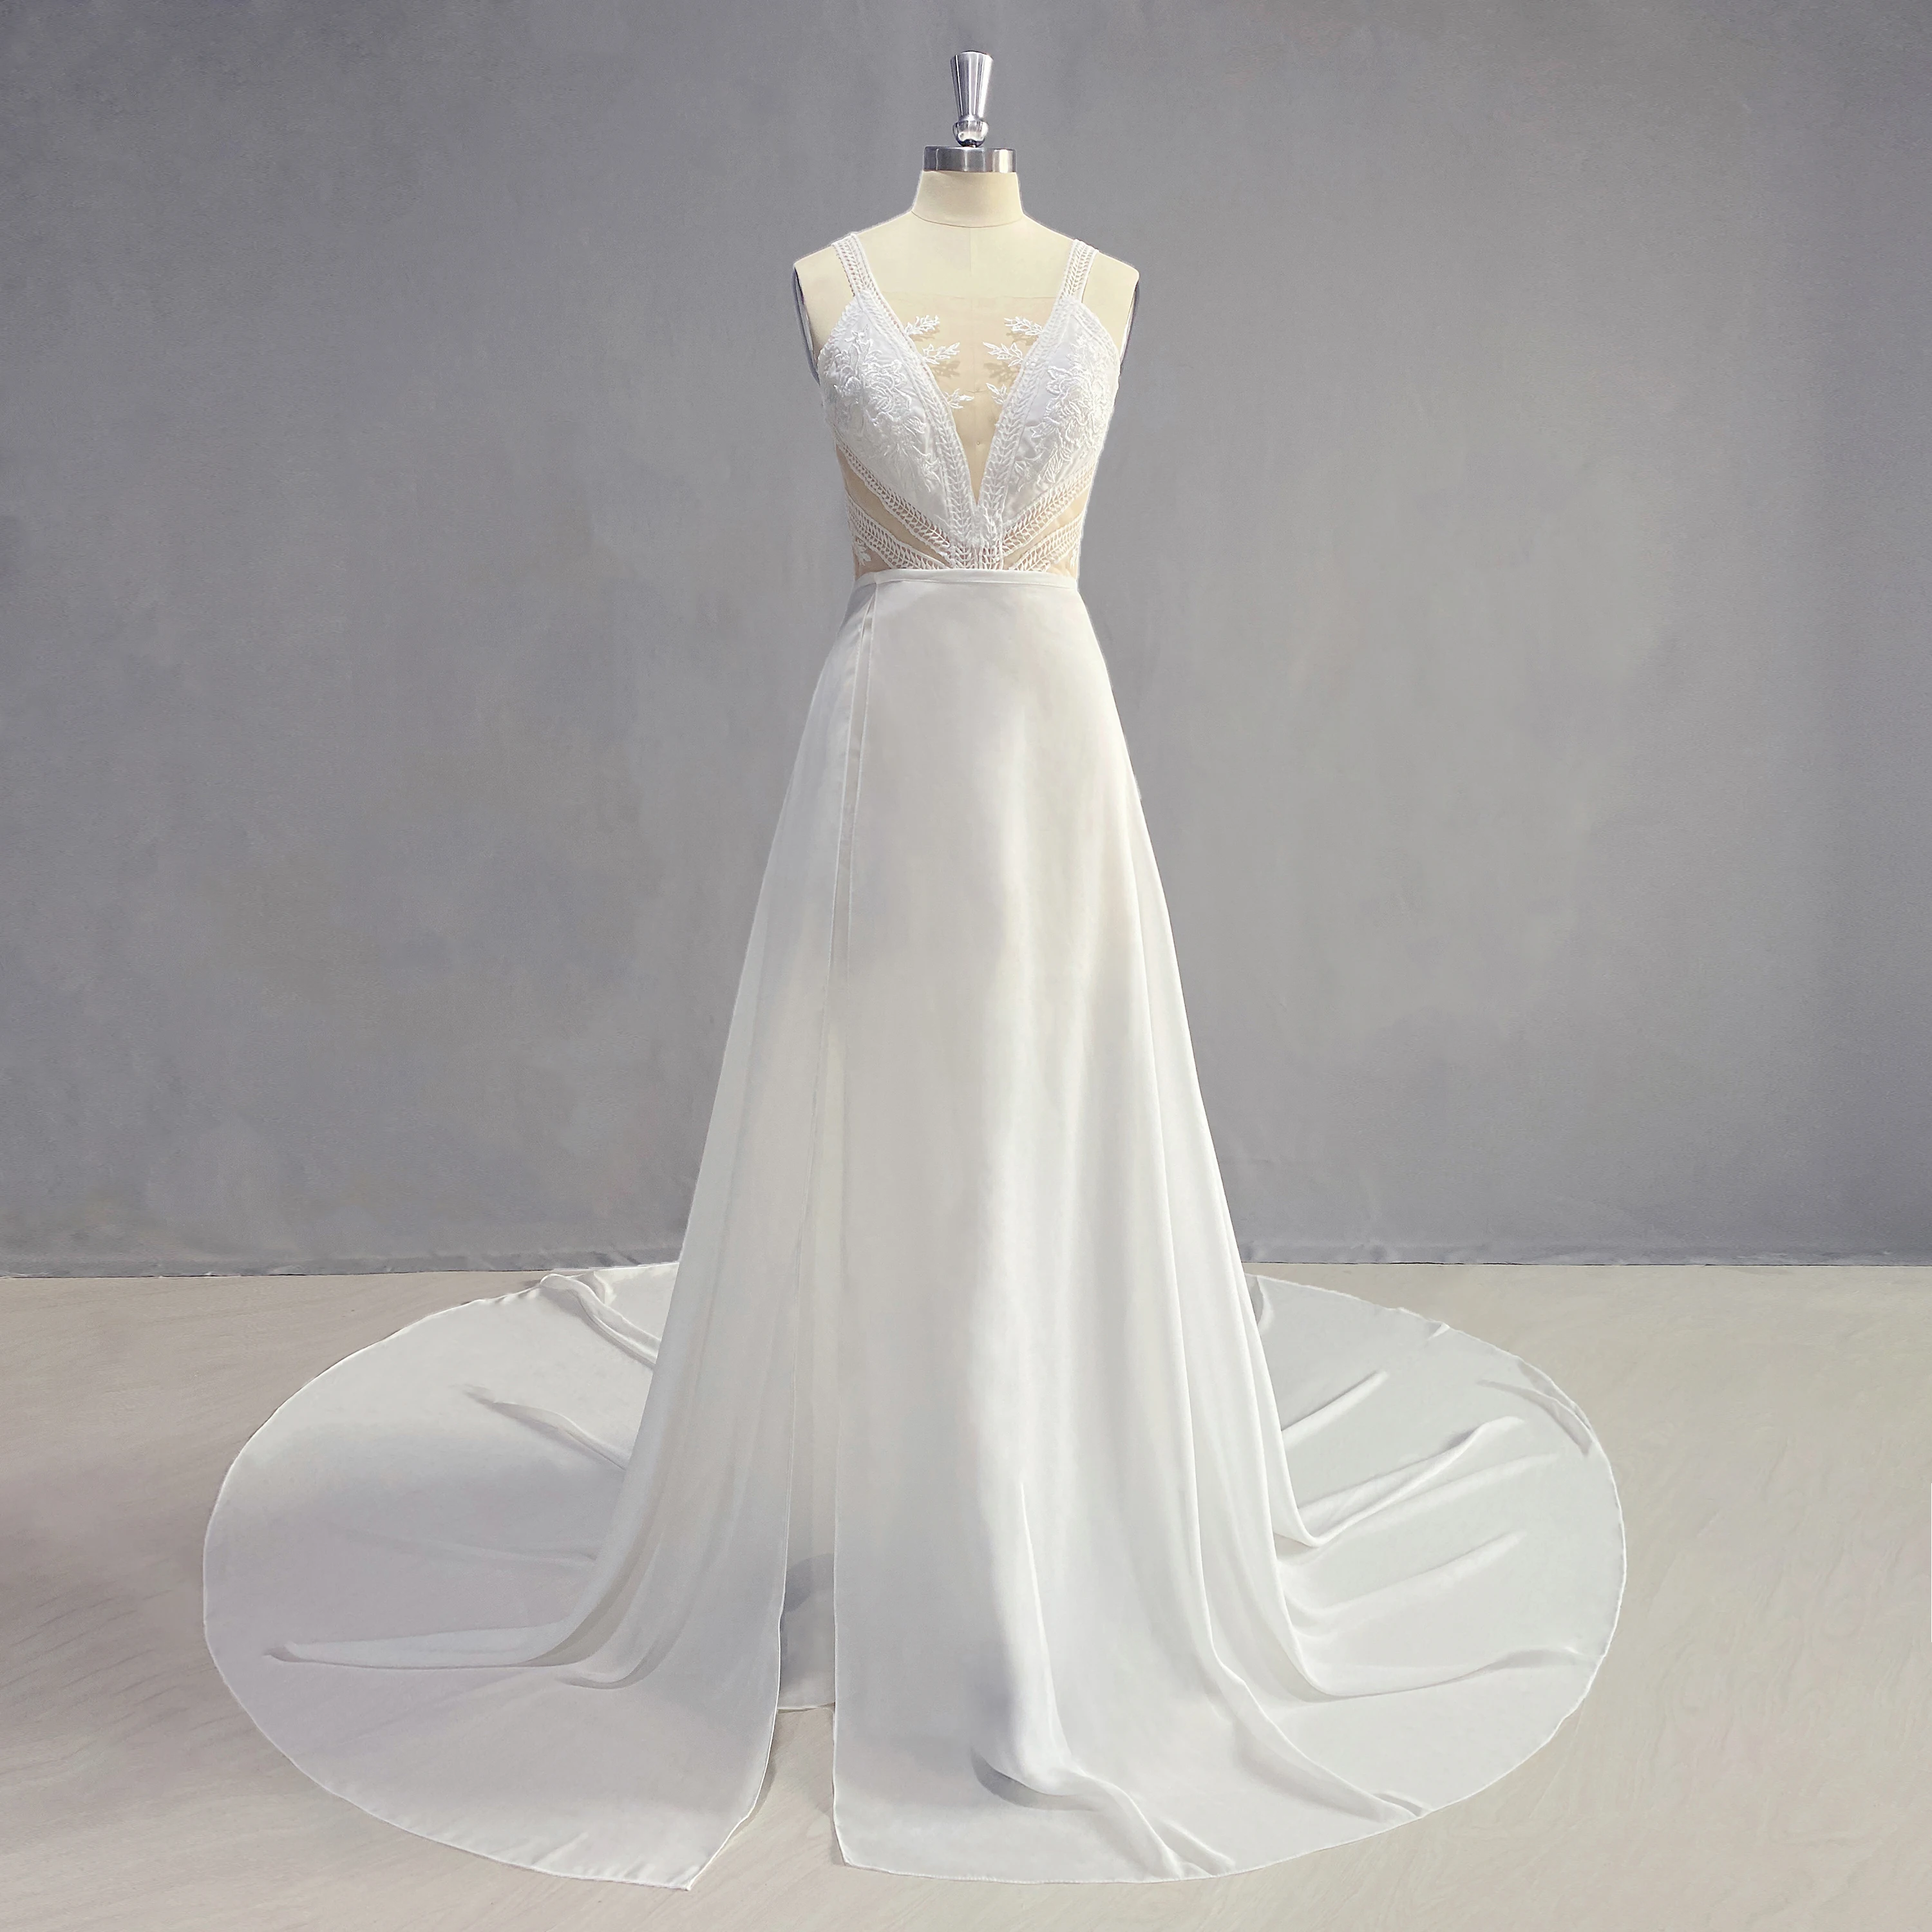 DIDEYTTAWL 2023 2 in 1 Detachable Wedding Dress Real Photo V Neck Appliqued Sheer Bodice Detachable Skirt Bride Wedding Dress